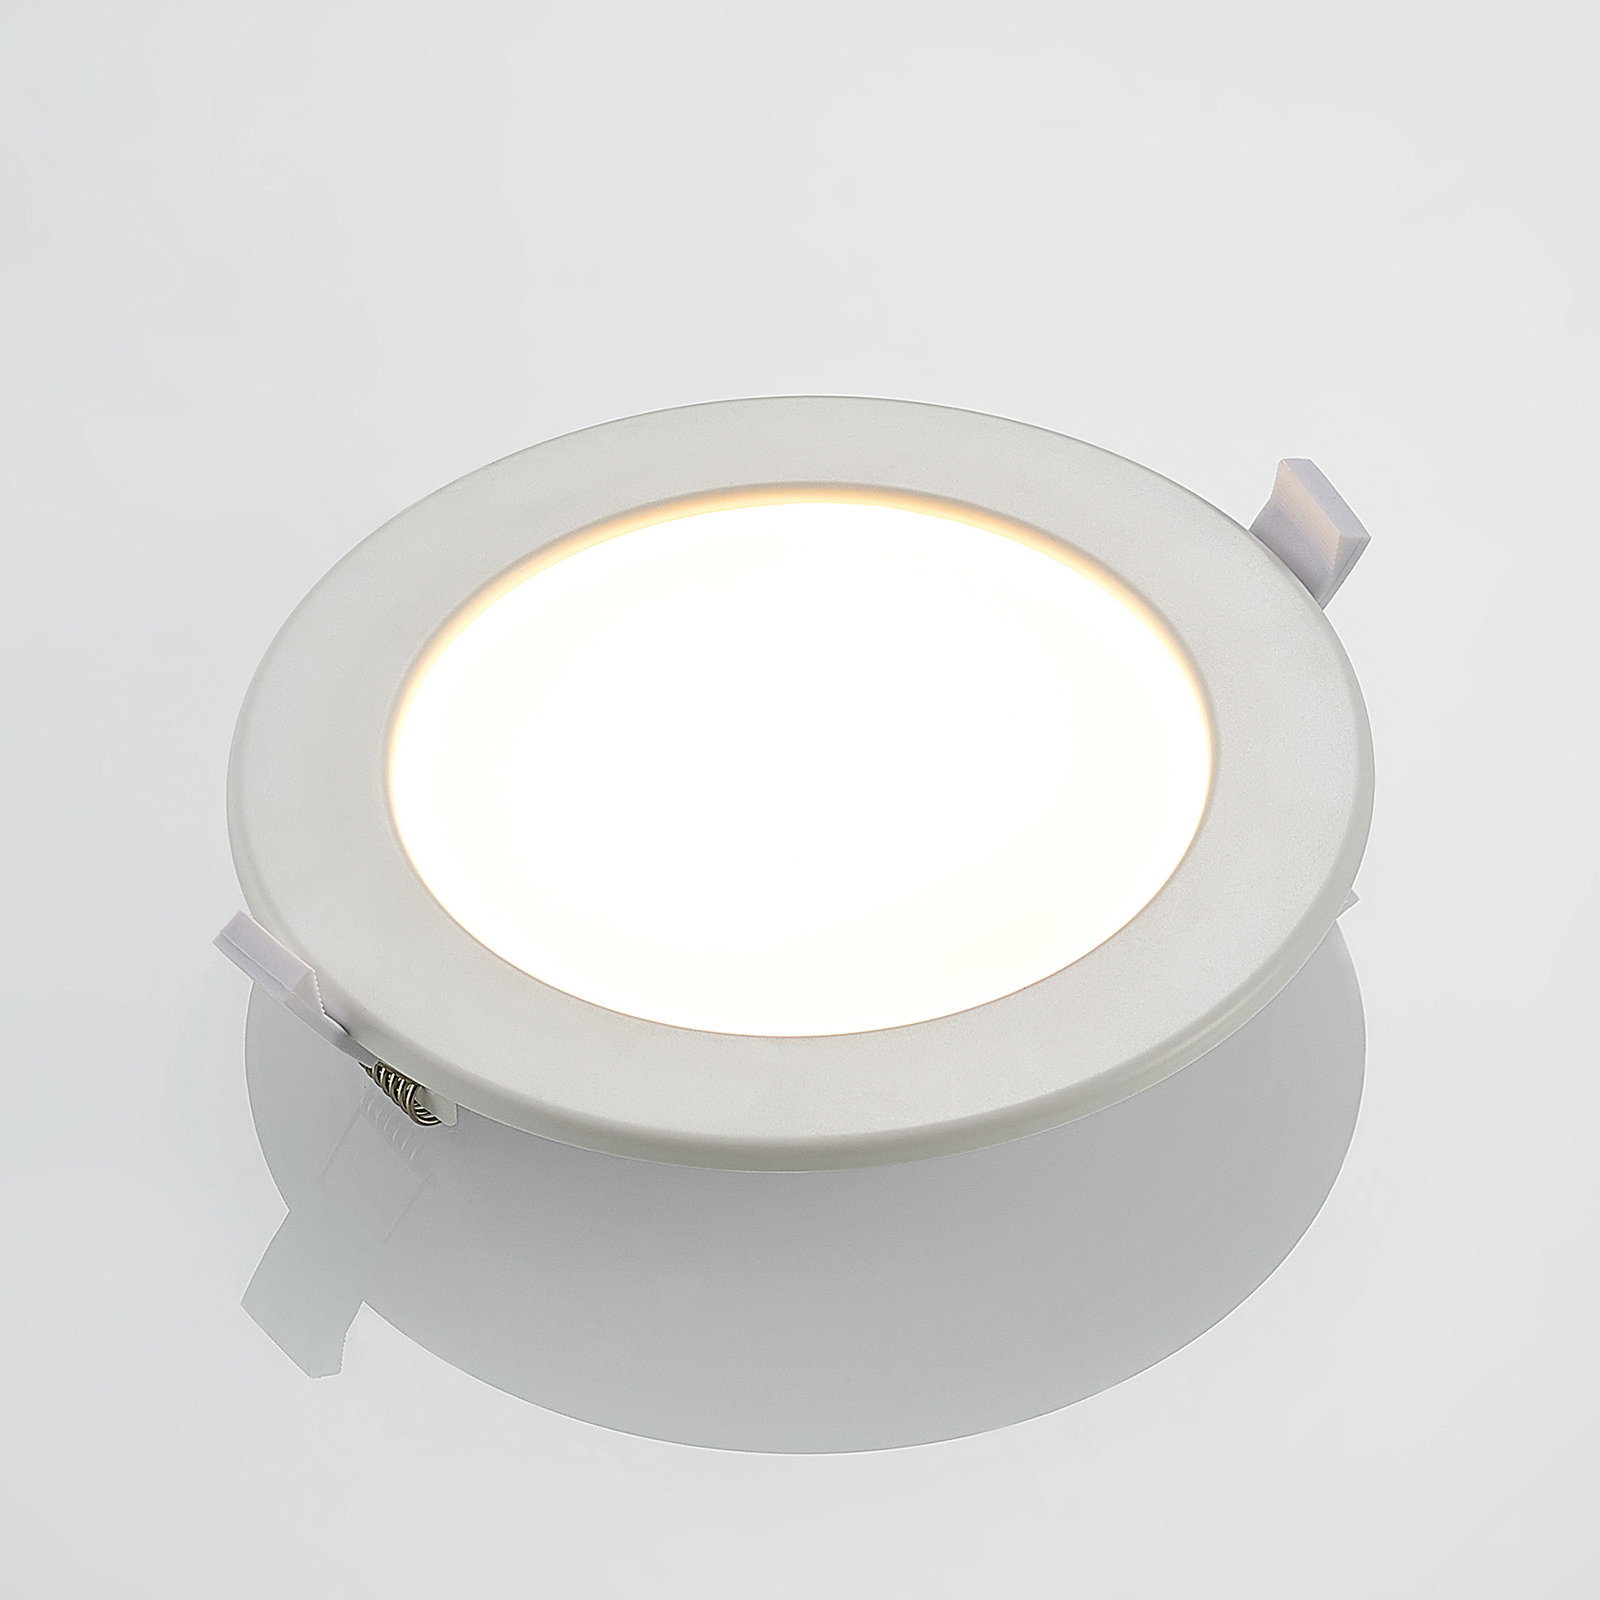 Prios Cadance -LED-uppovalo valk. 17 cm, 3 kpl